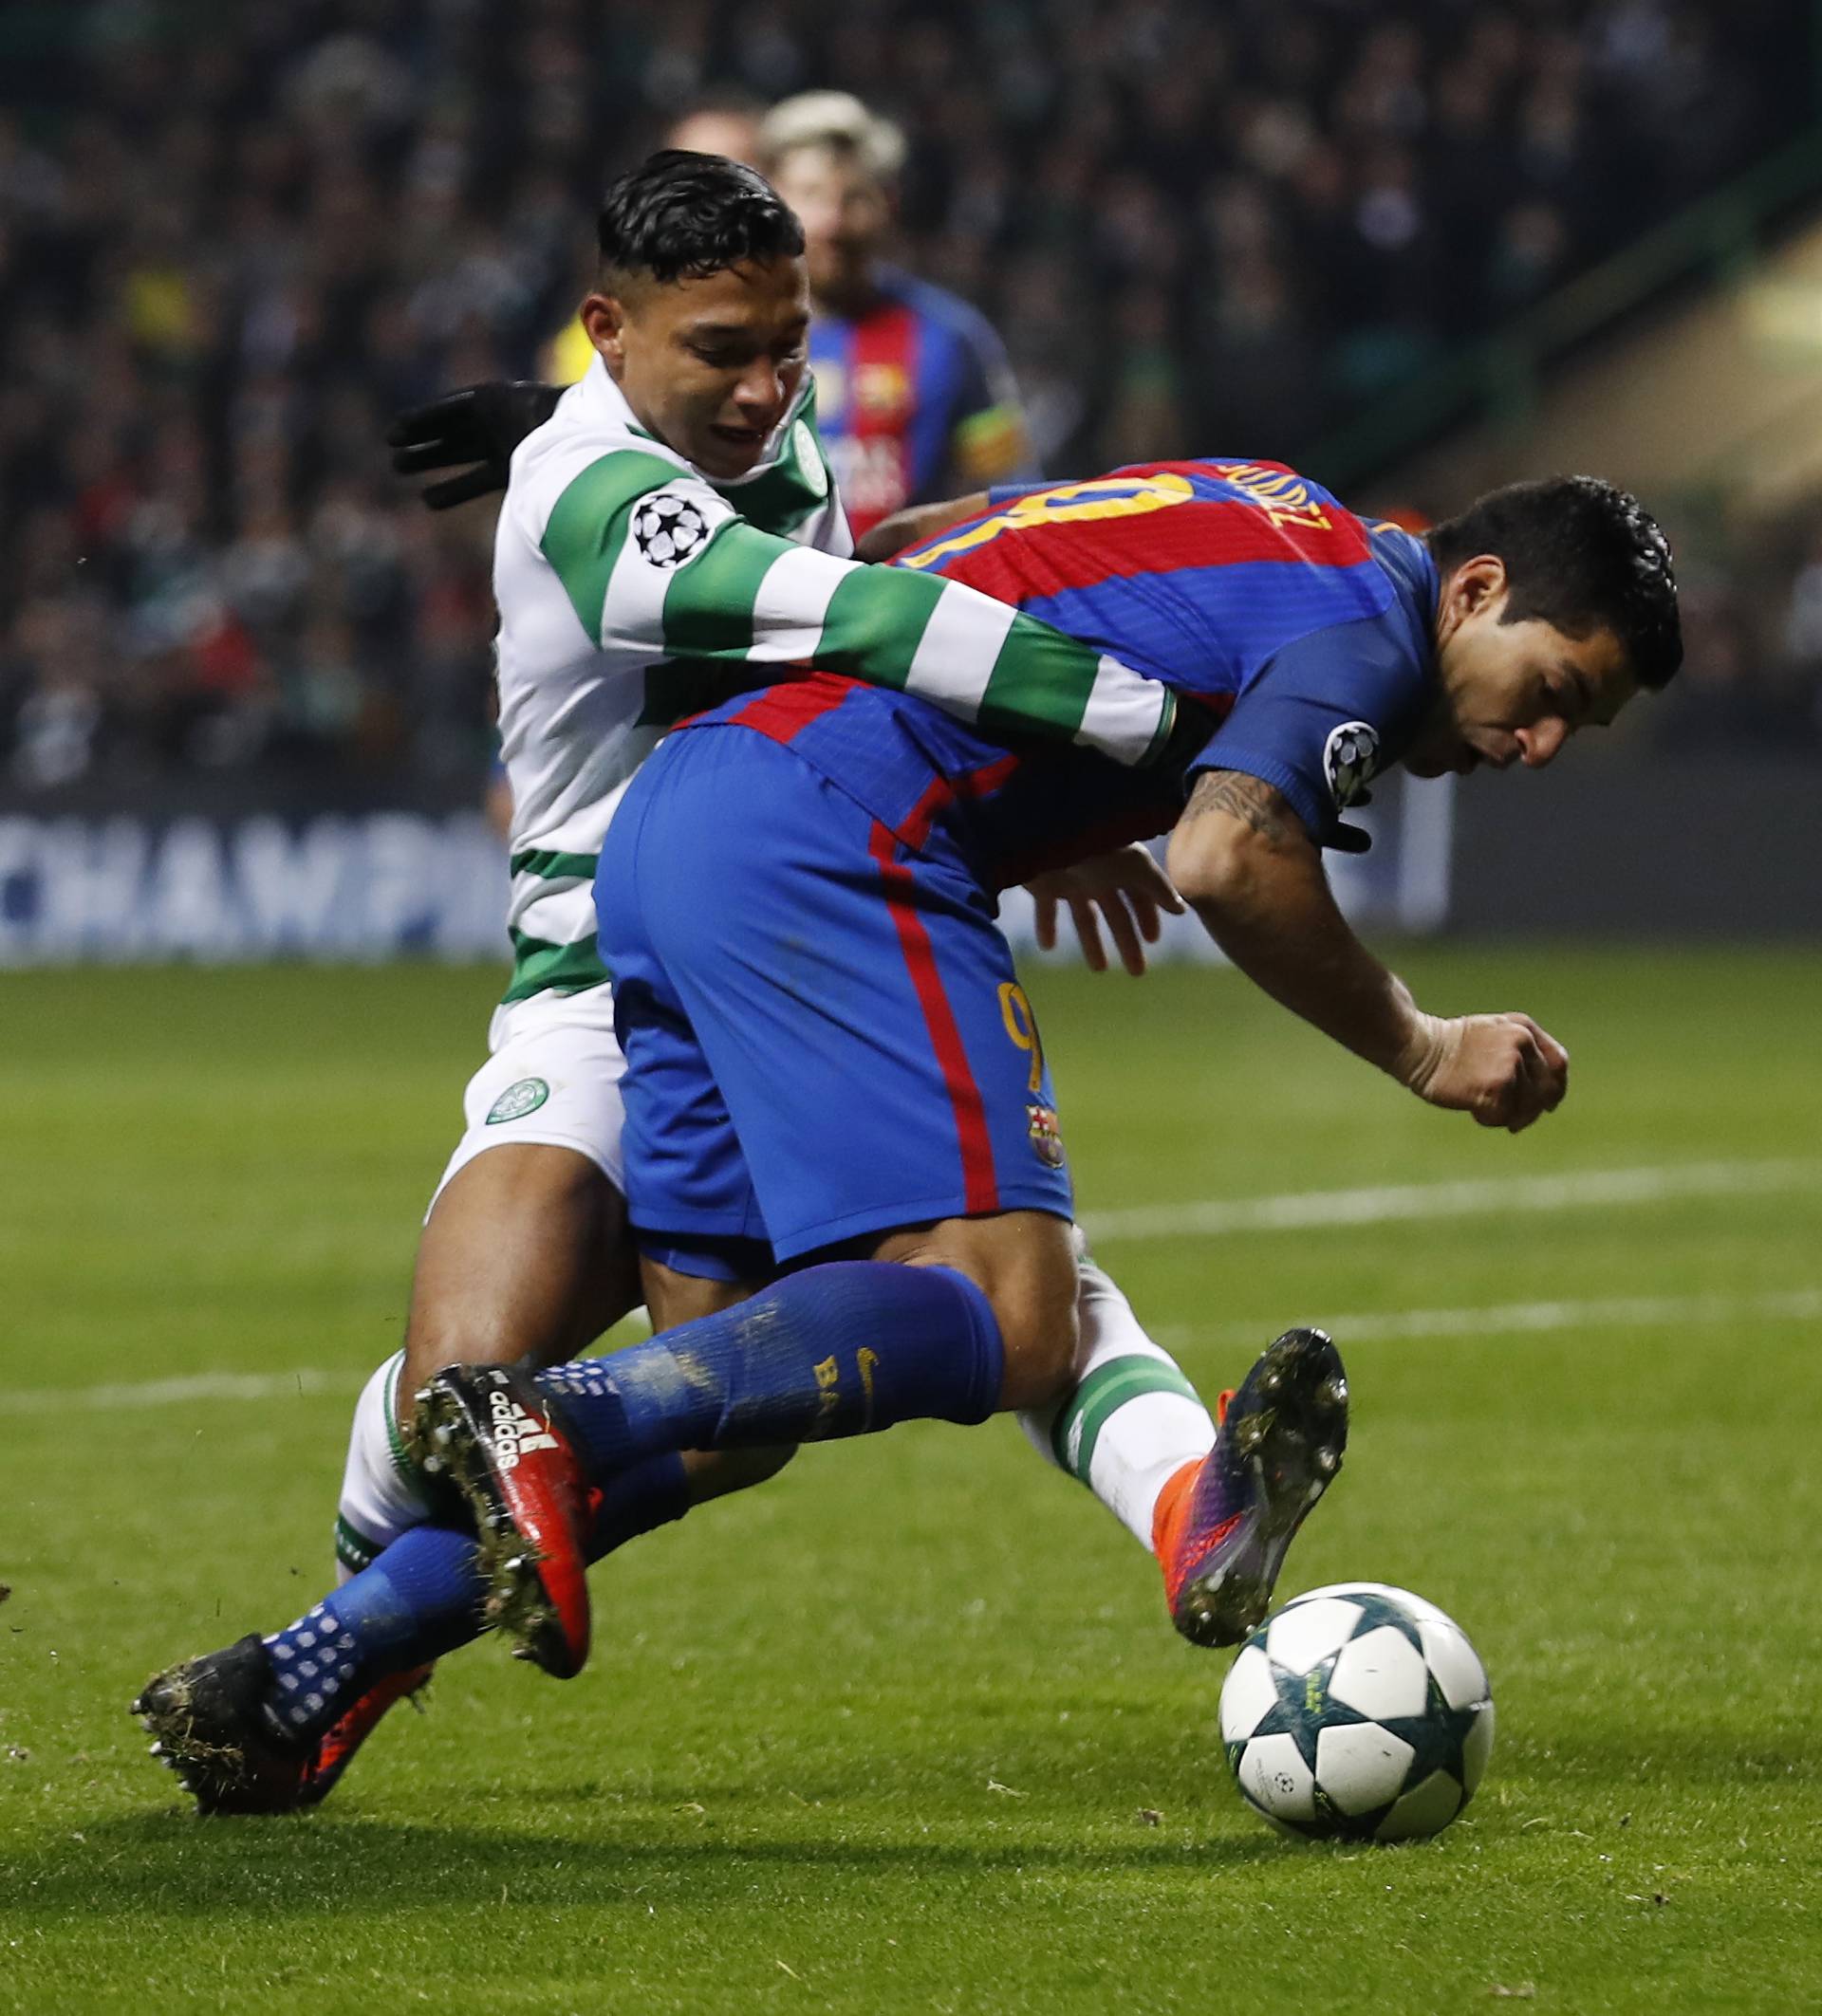 Barcelona's Luis Suarez in action with Celtic's Emilio Izaguirre